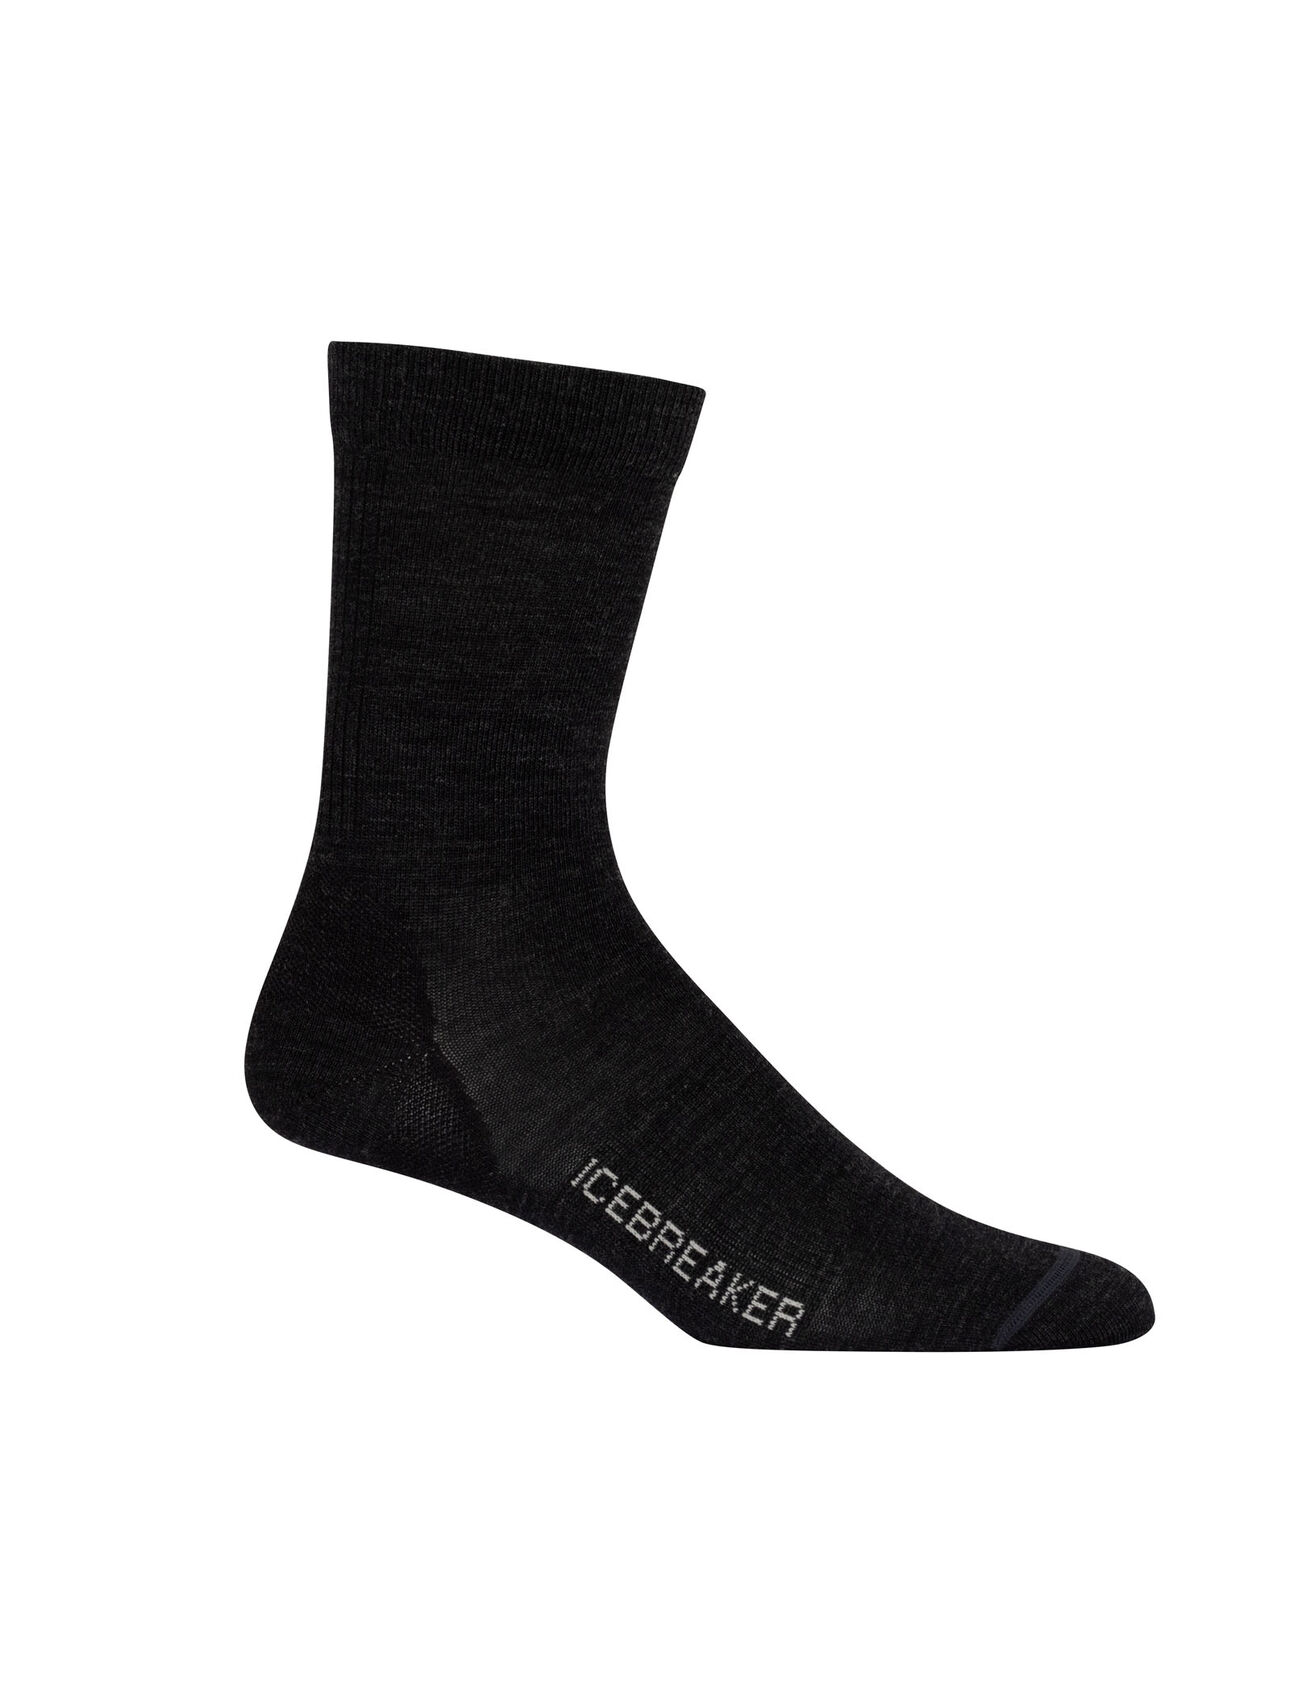 Merino Lifestyle Ultralight Crew Socks